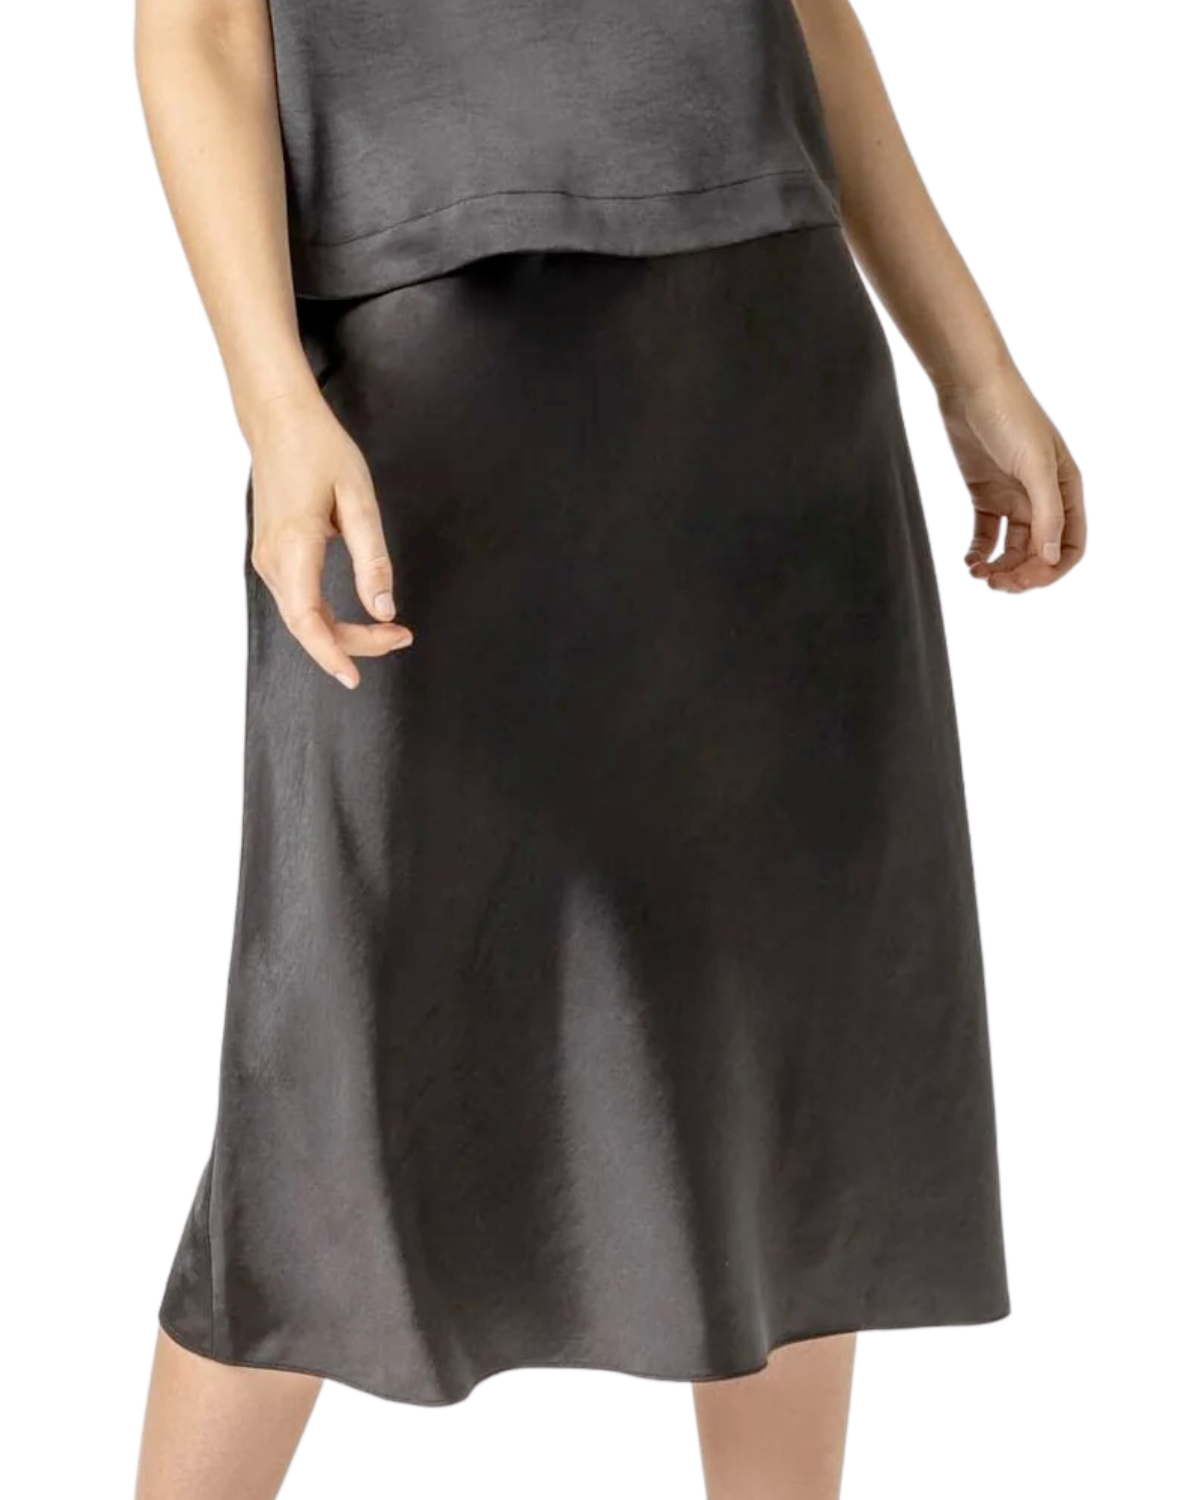 Bias Cut Satin Skirt (Black)